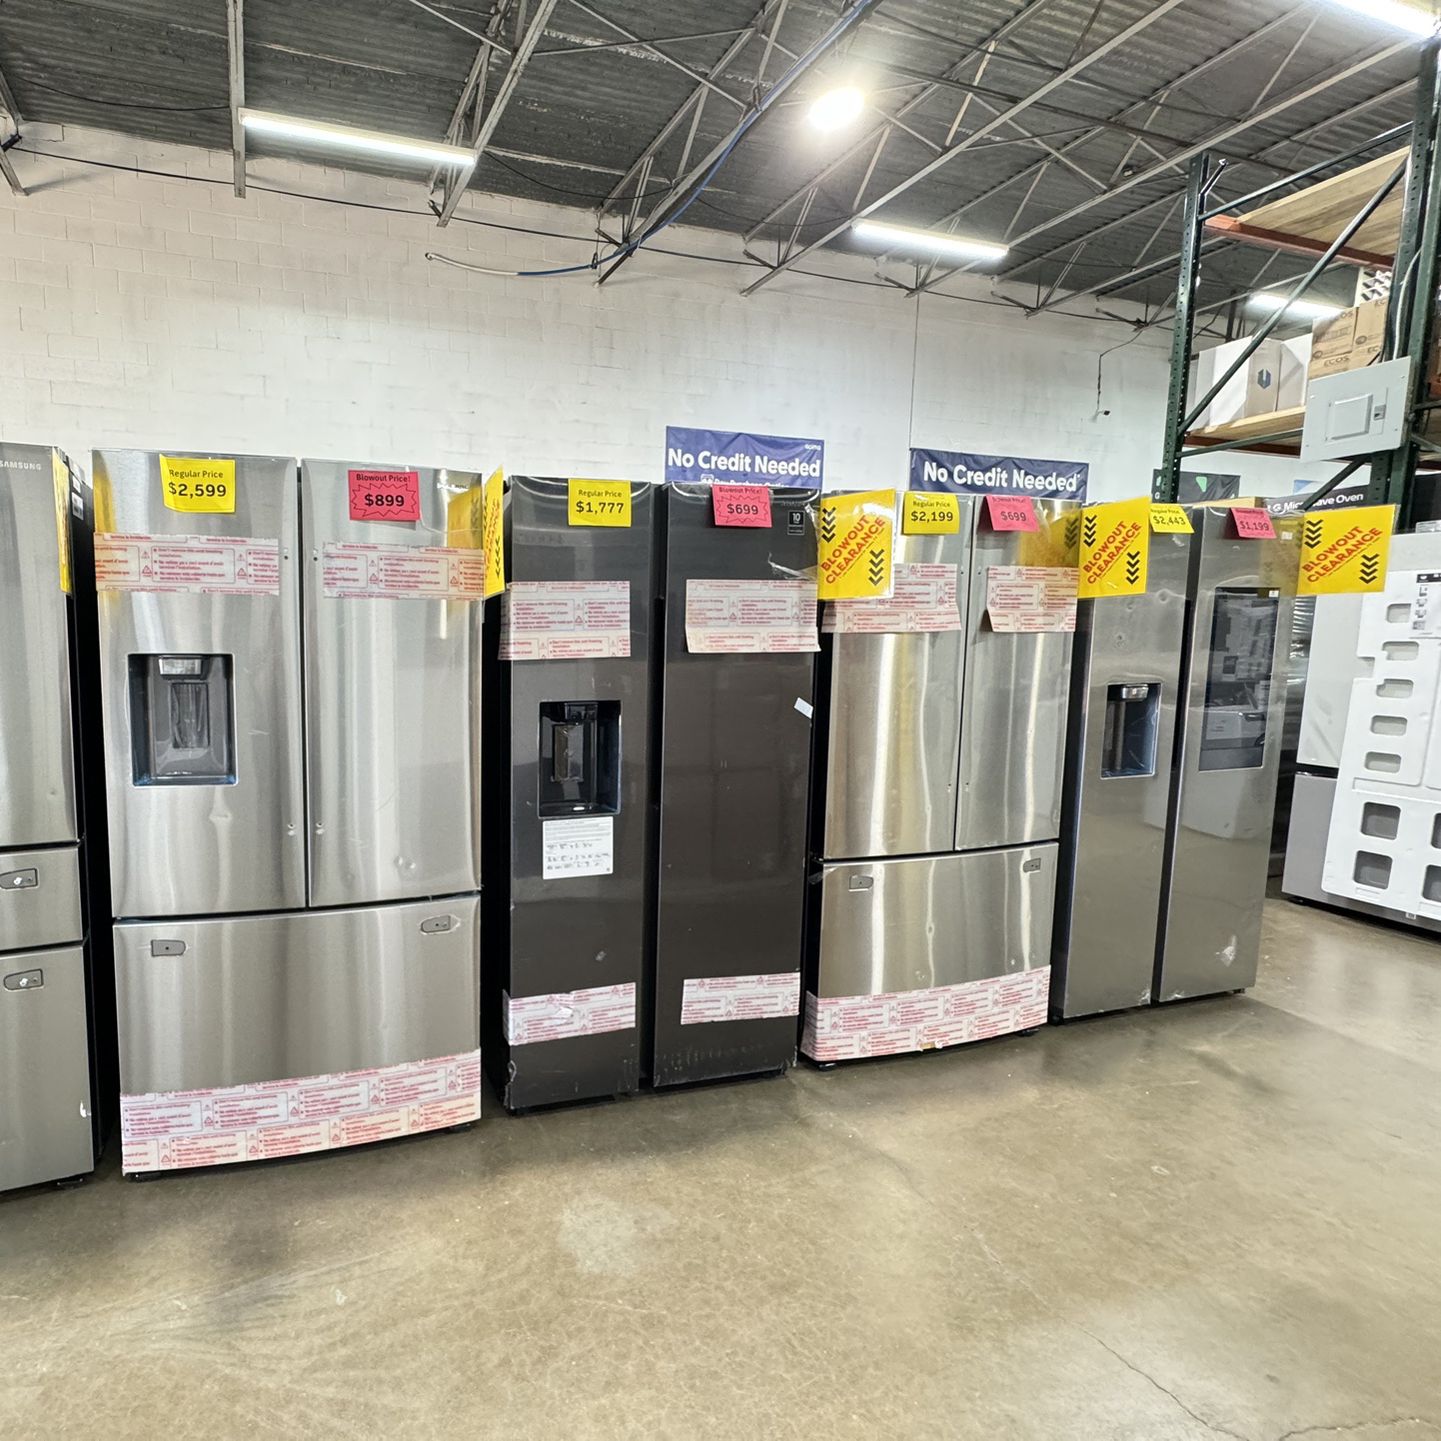 LIQUIDATION on Smart Refrigerators!Starting At $699